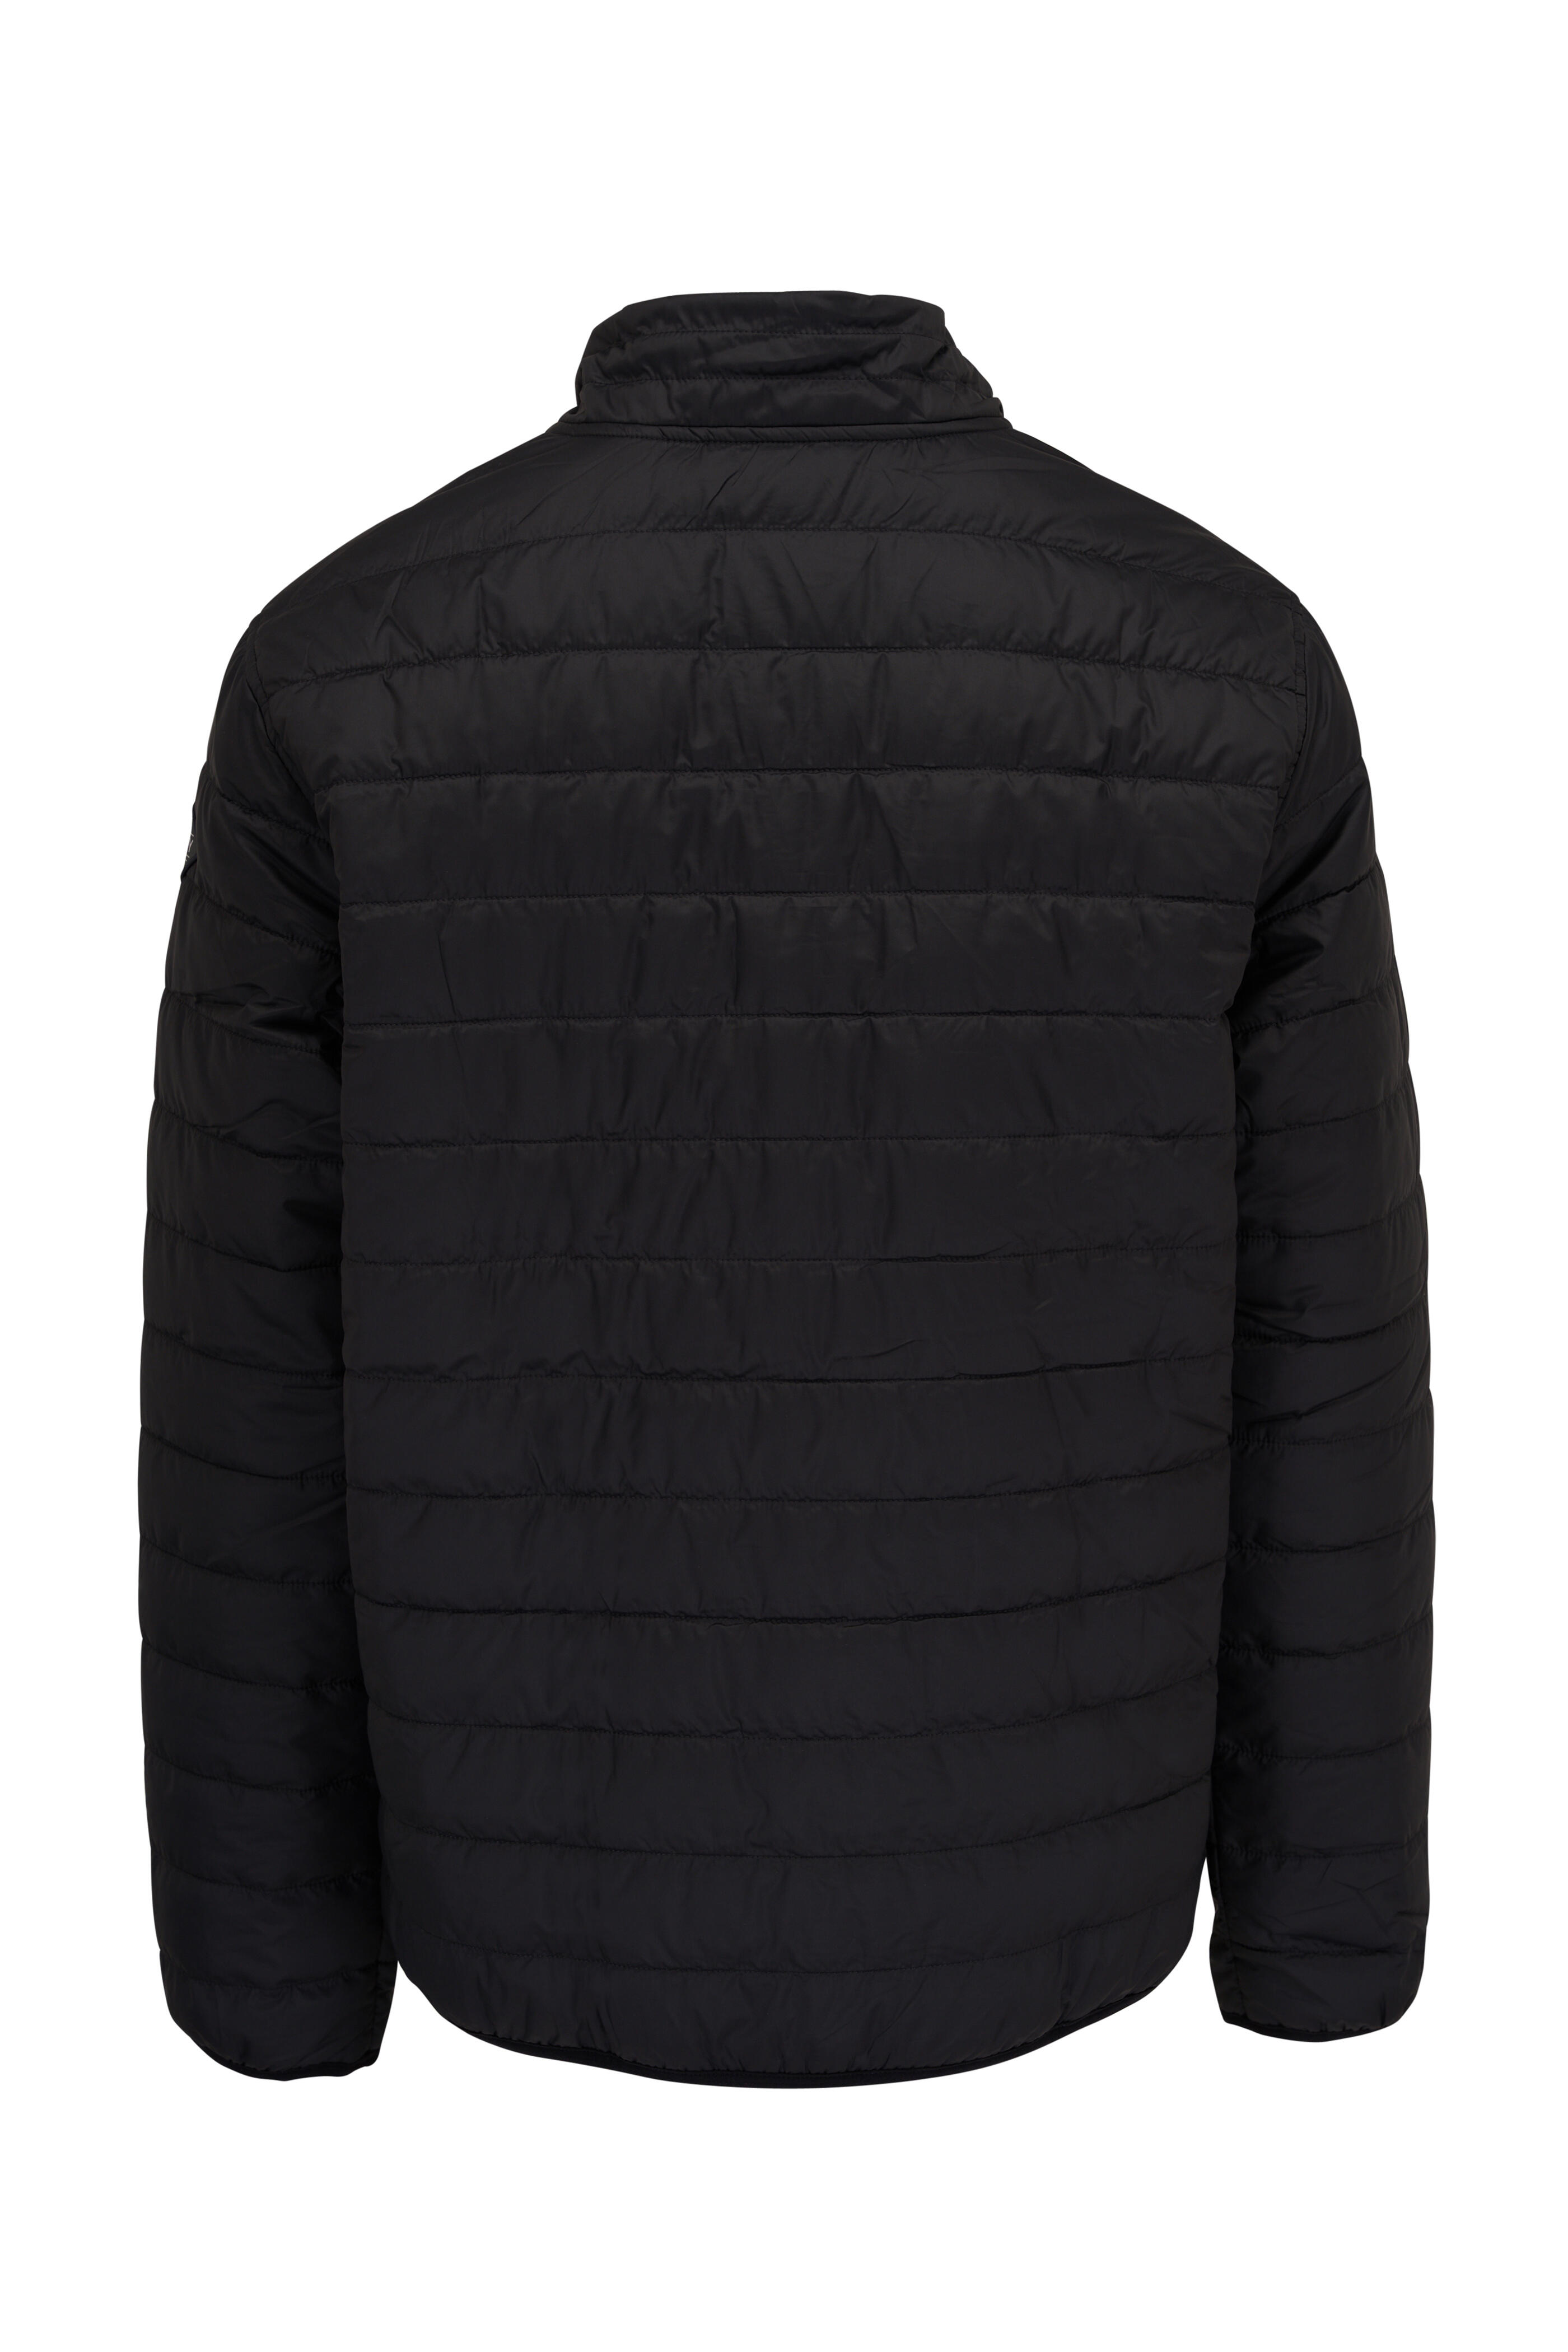 Faherty Brand - Atmosphere Black Full Zip Quilted Jacket